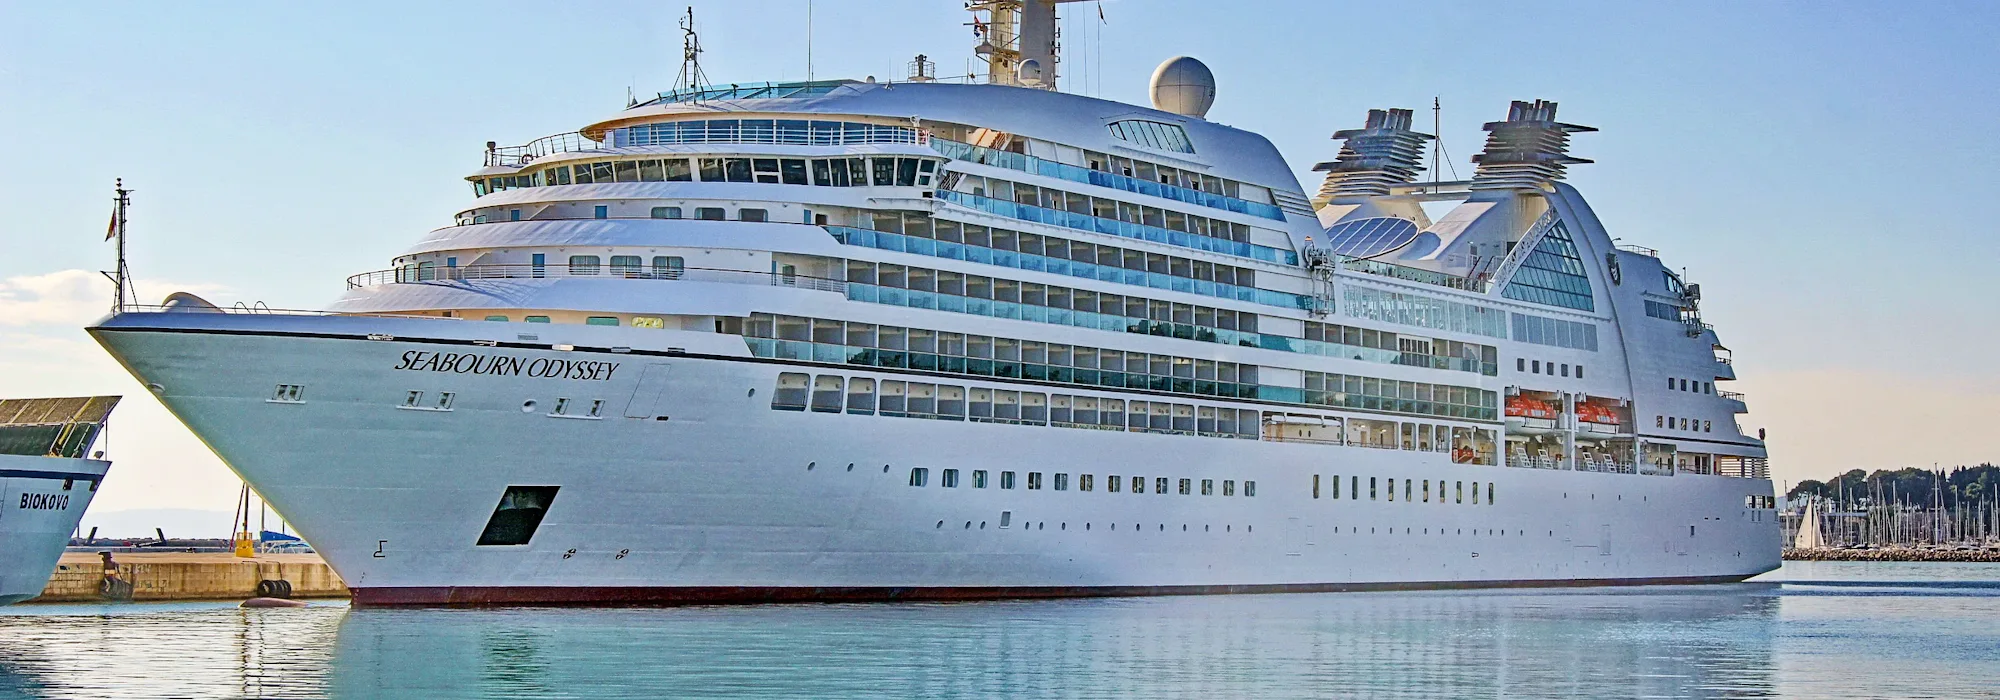 Seabourn Odyssey - Seabourn Cruises